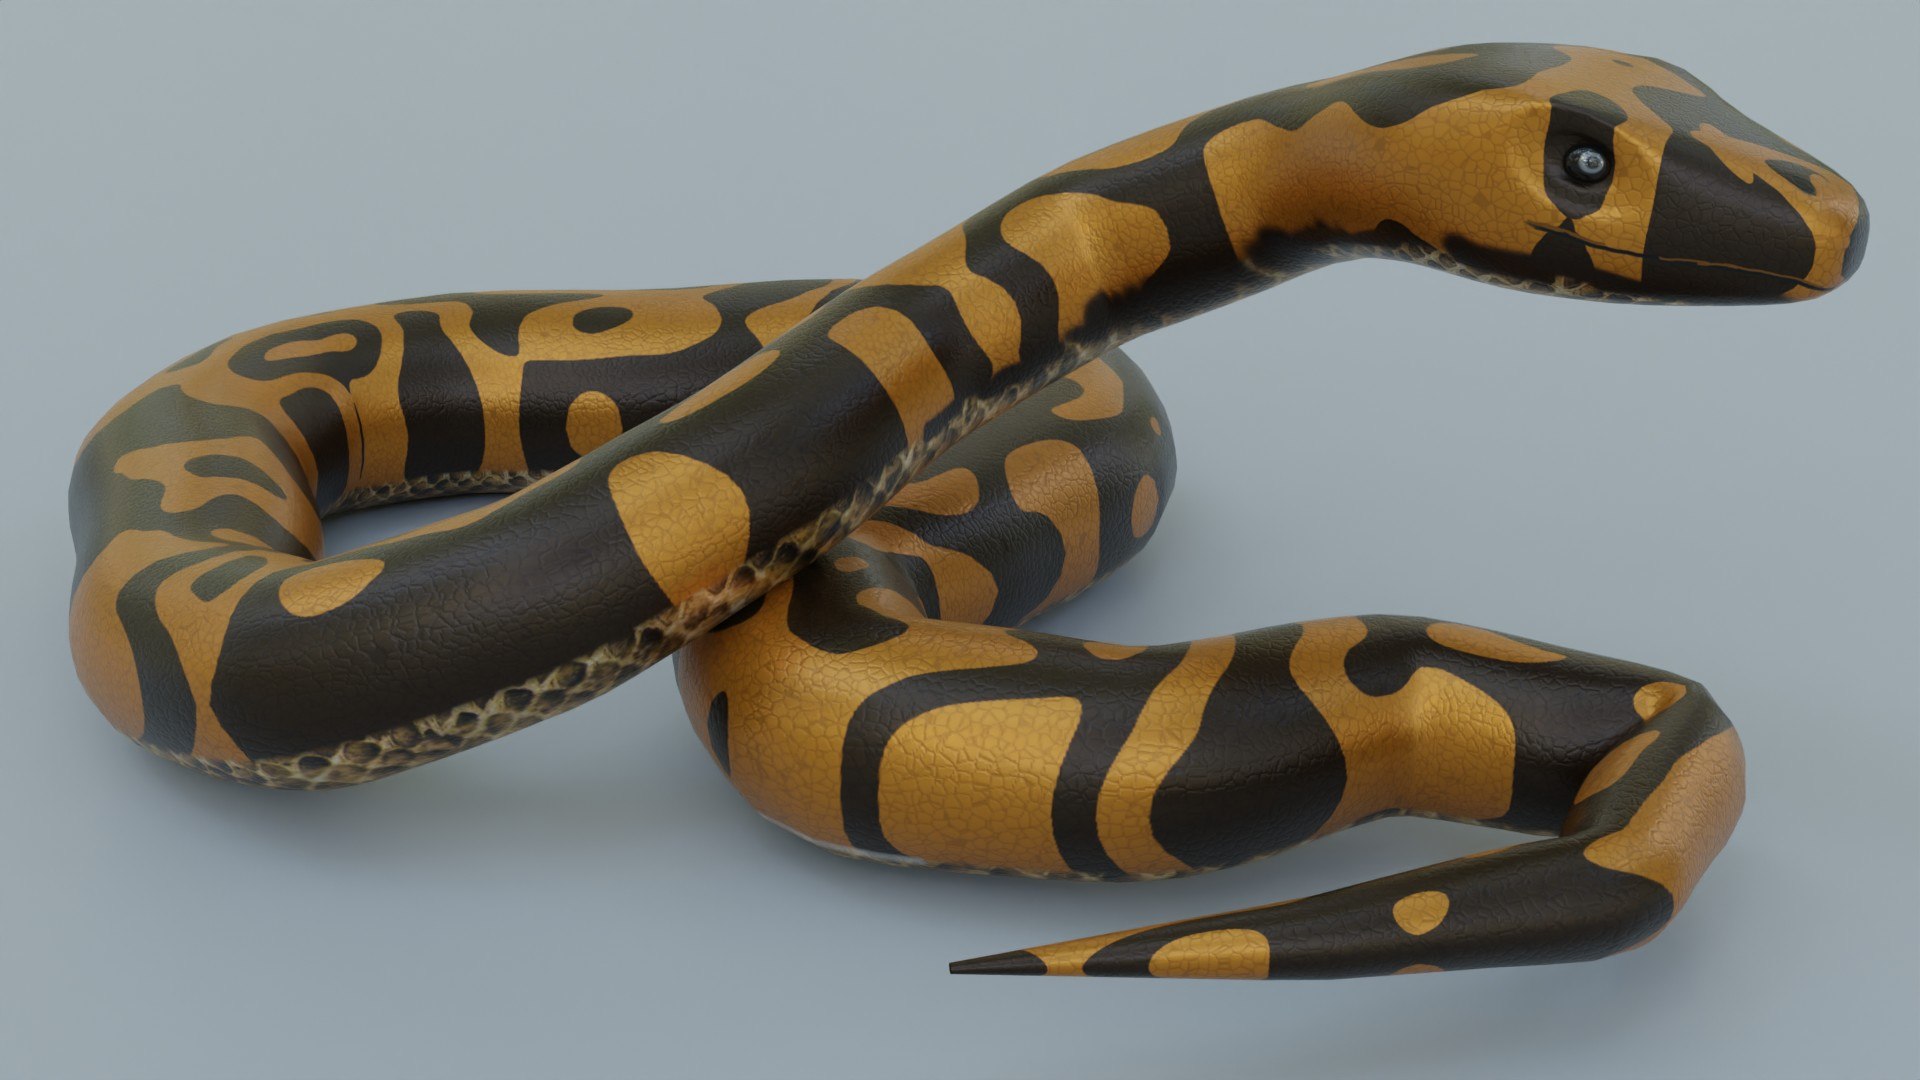 Color Snake 3D Online - Jogo Gratuito Online